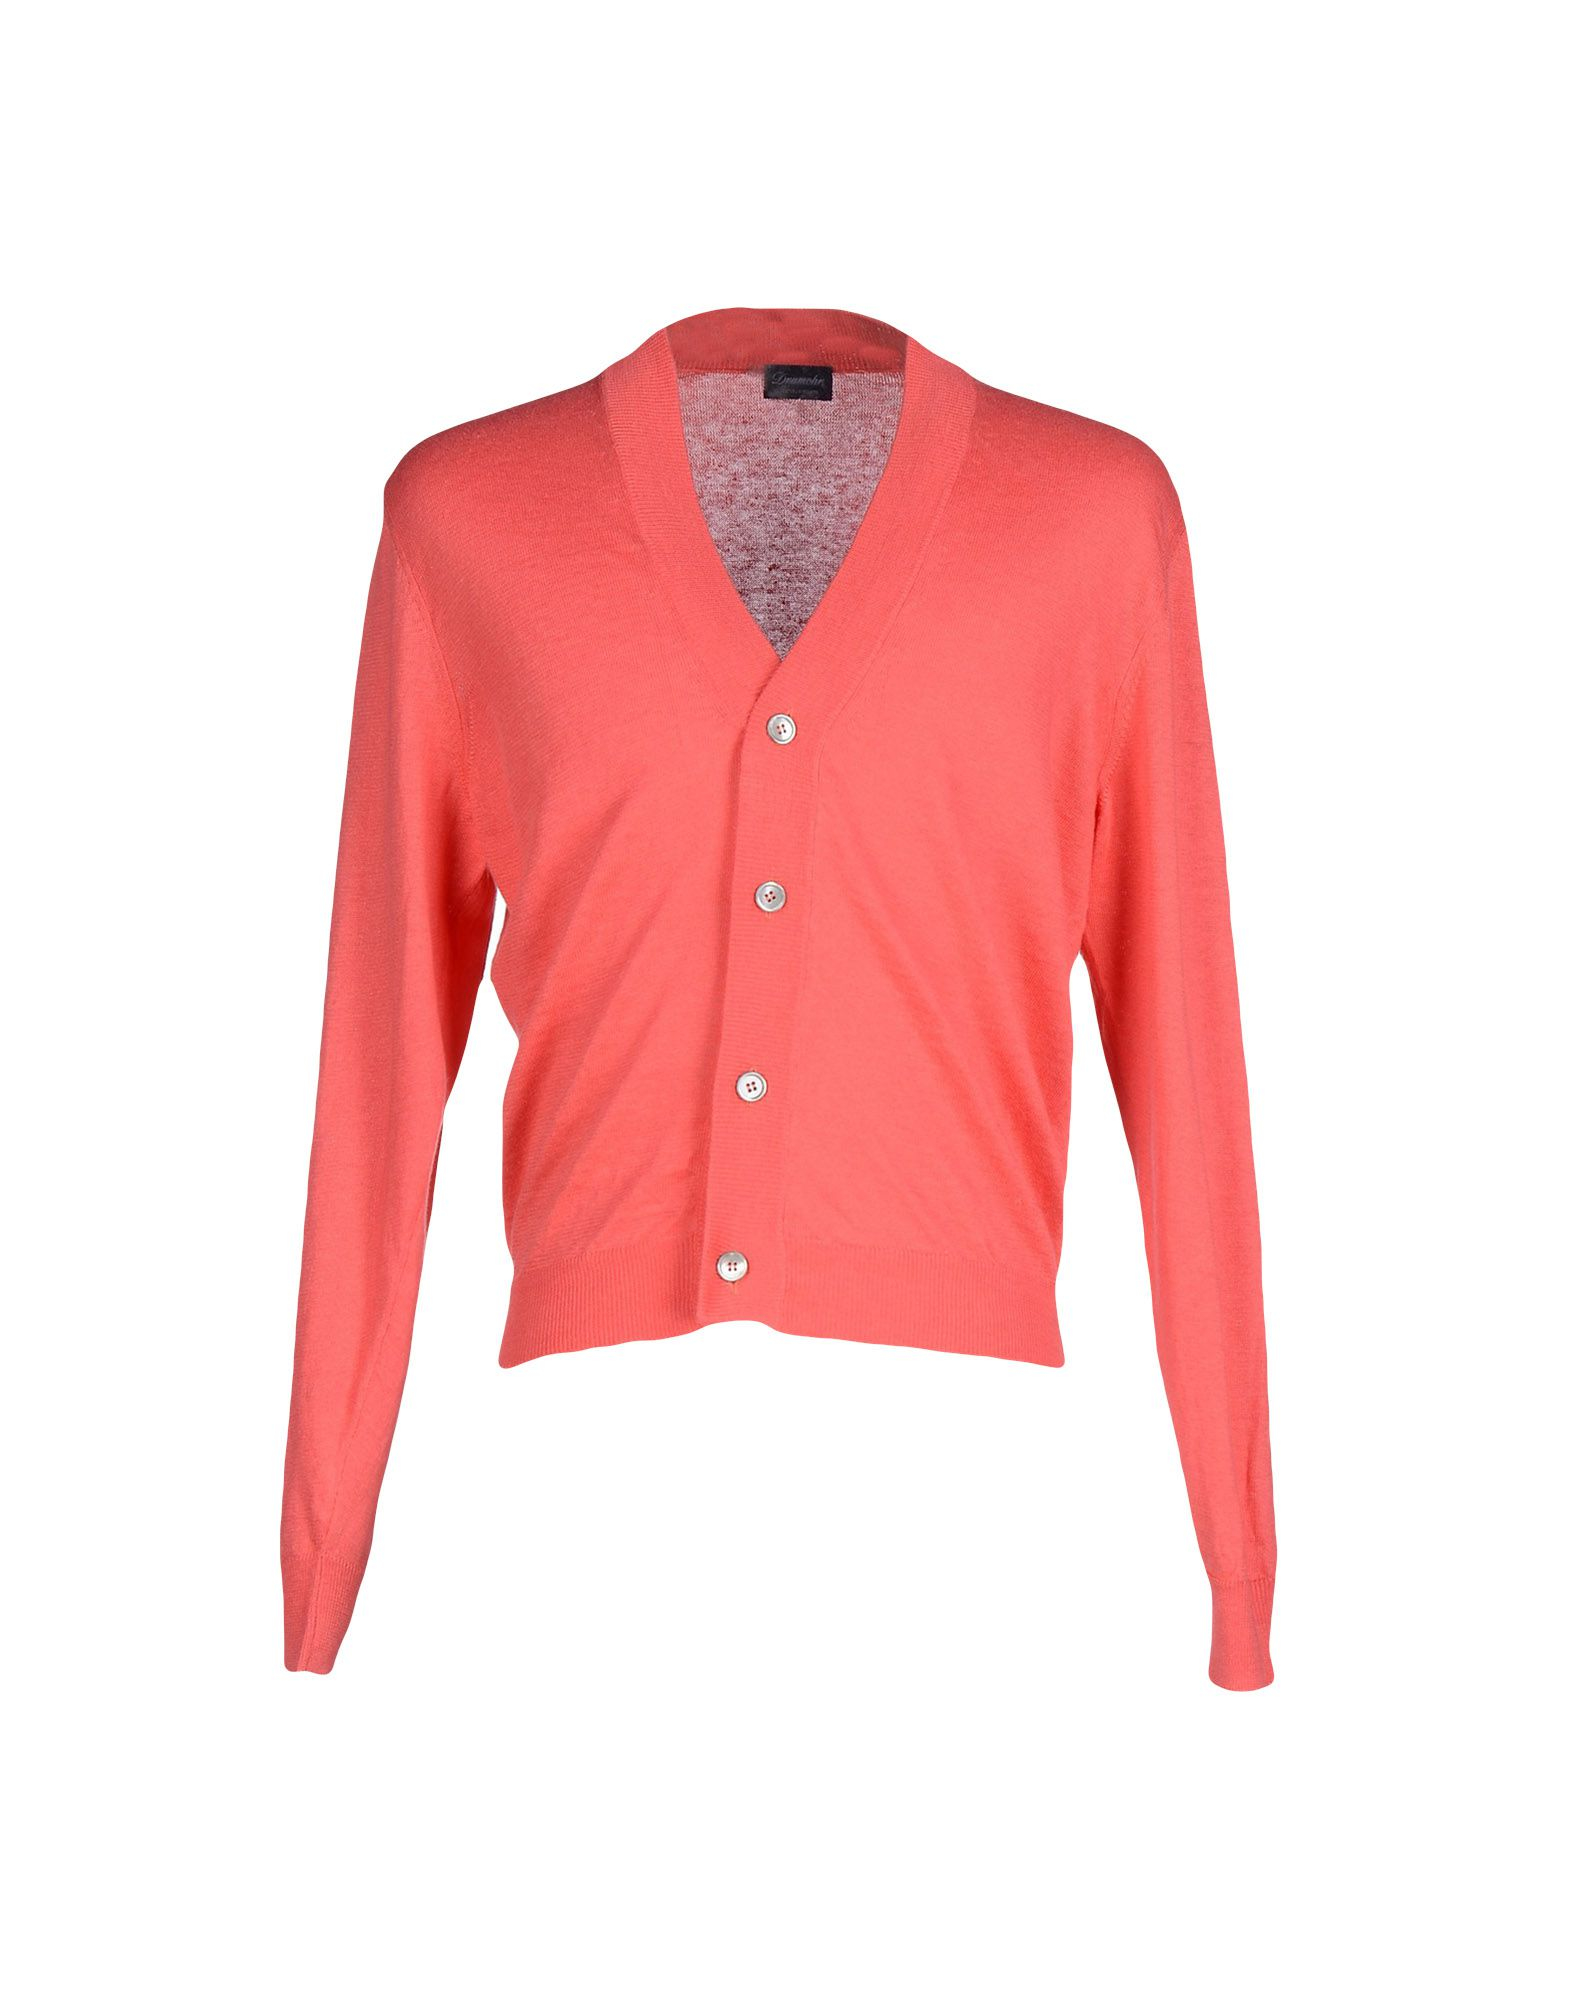 Drumohr Cardigan in Pink for Men (Coral) - Save 64% | Lyst